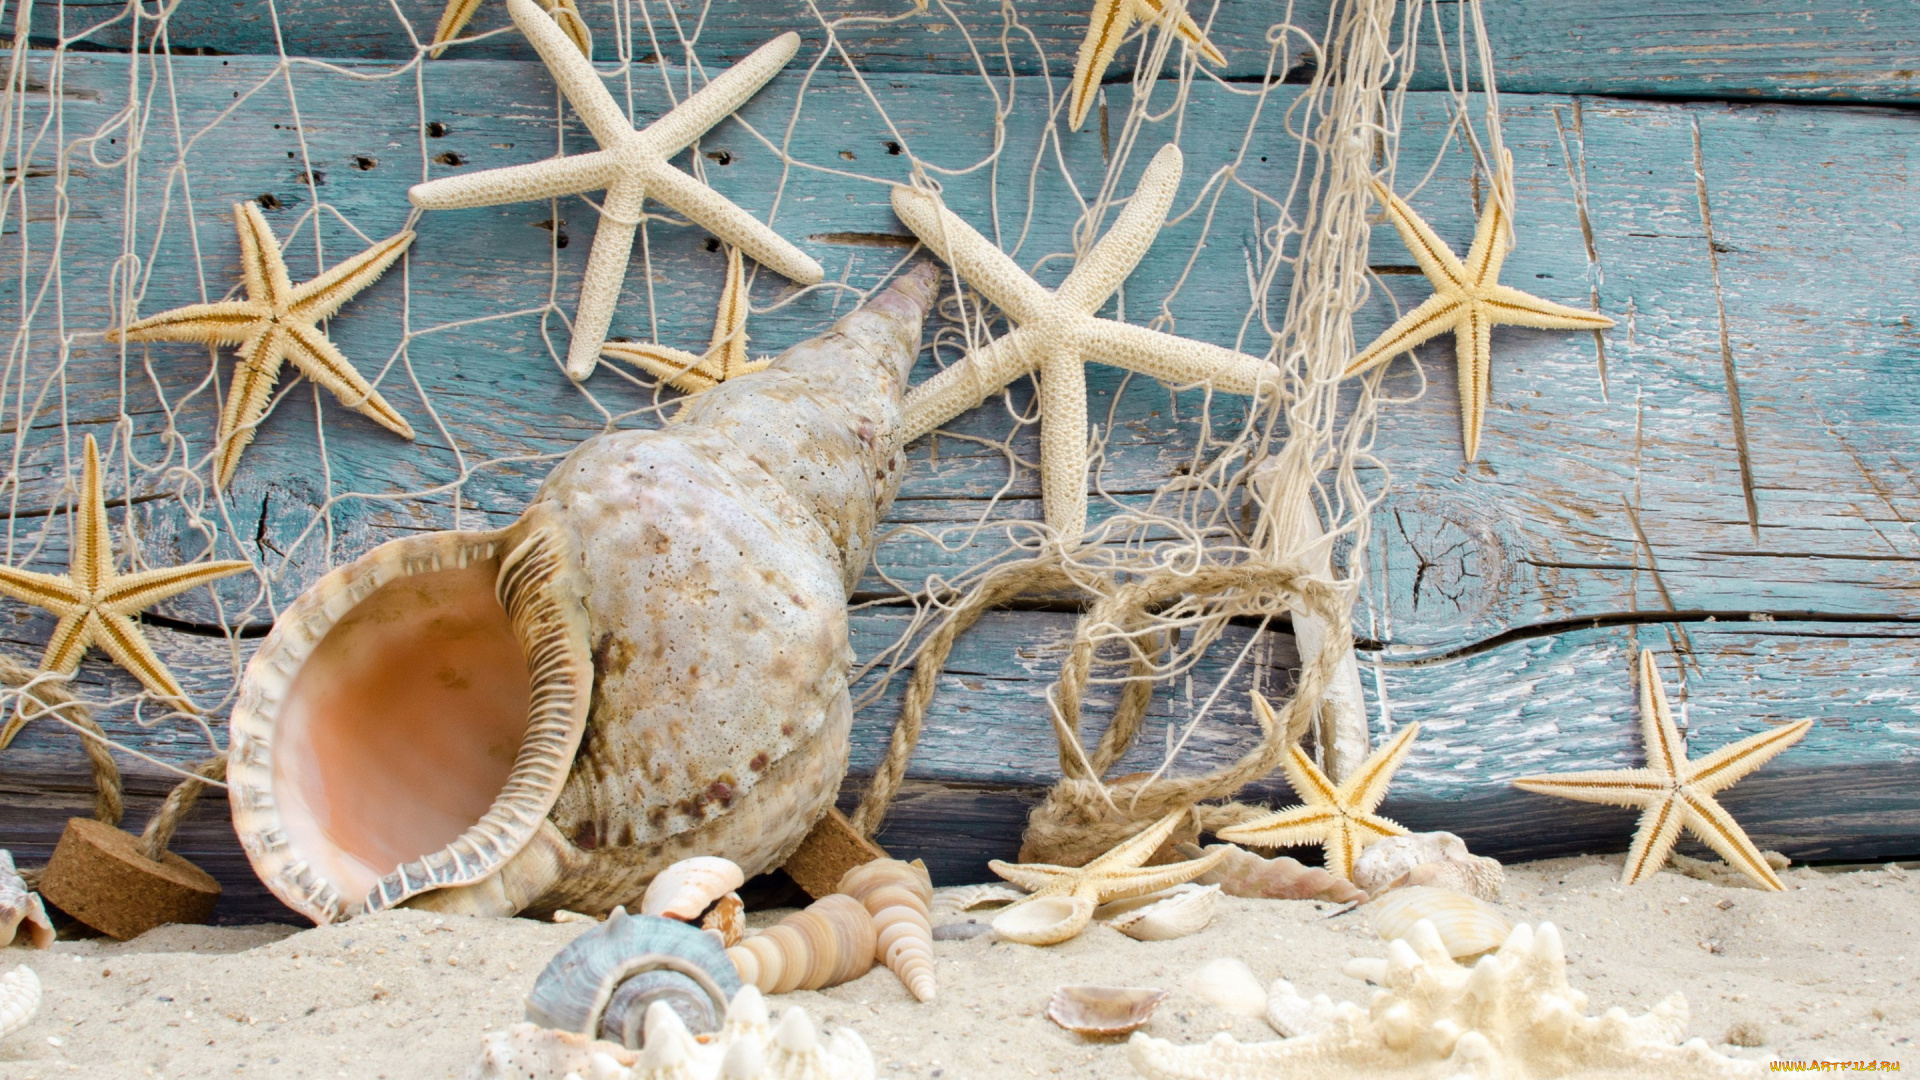 разное, ракушки, , кораллы, , декоративные, и, spa-камни, пляж, wood, marine, sand, beach, starfishes, seashells, звезды, песок